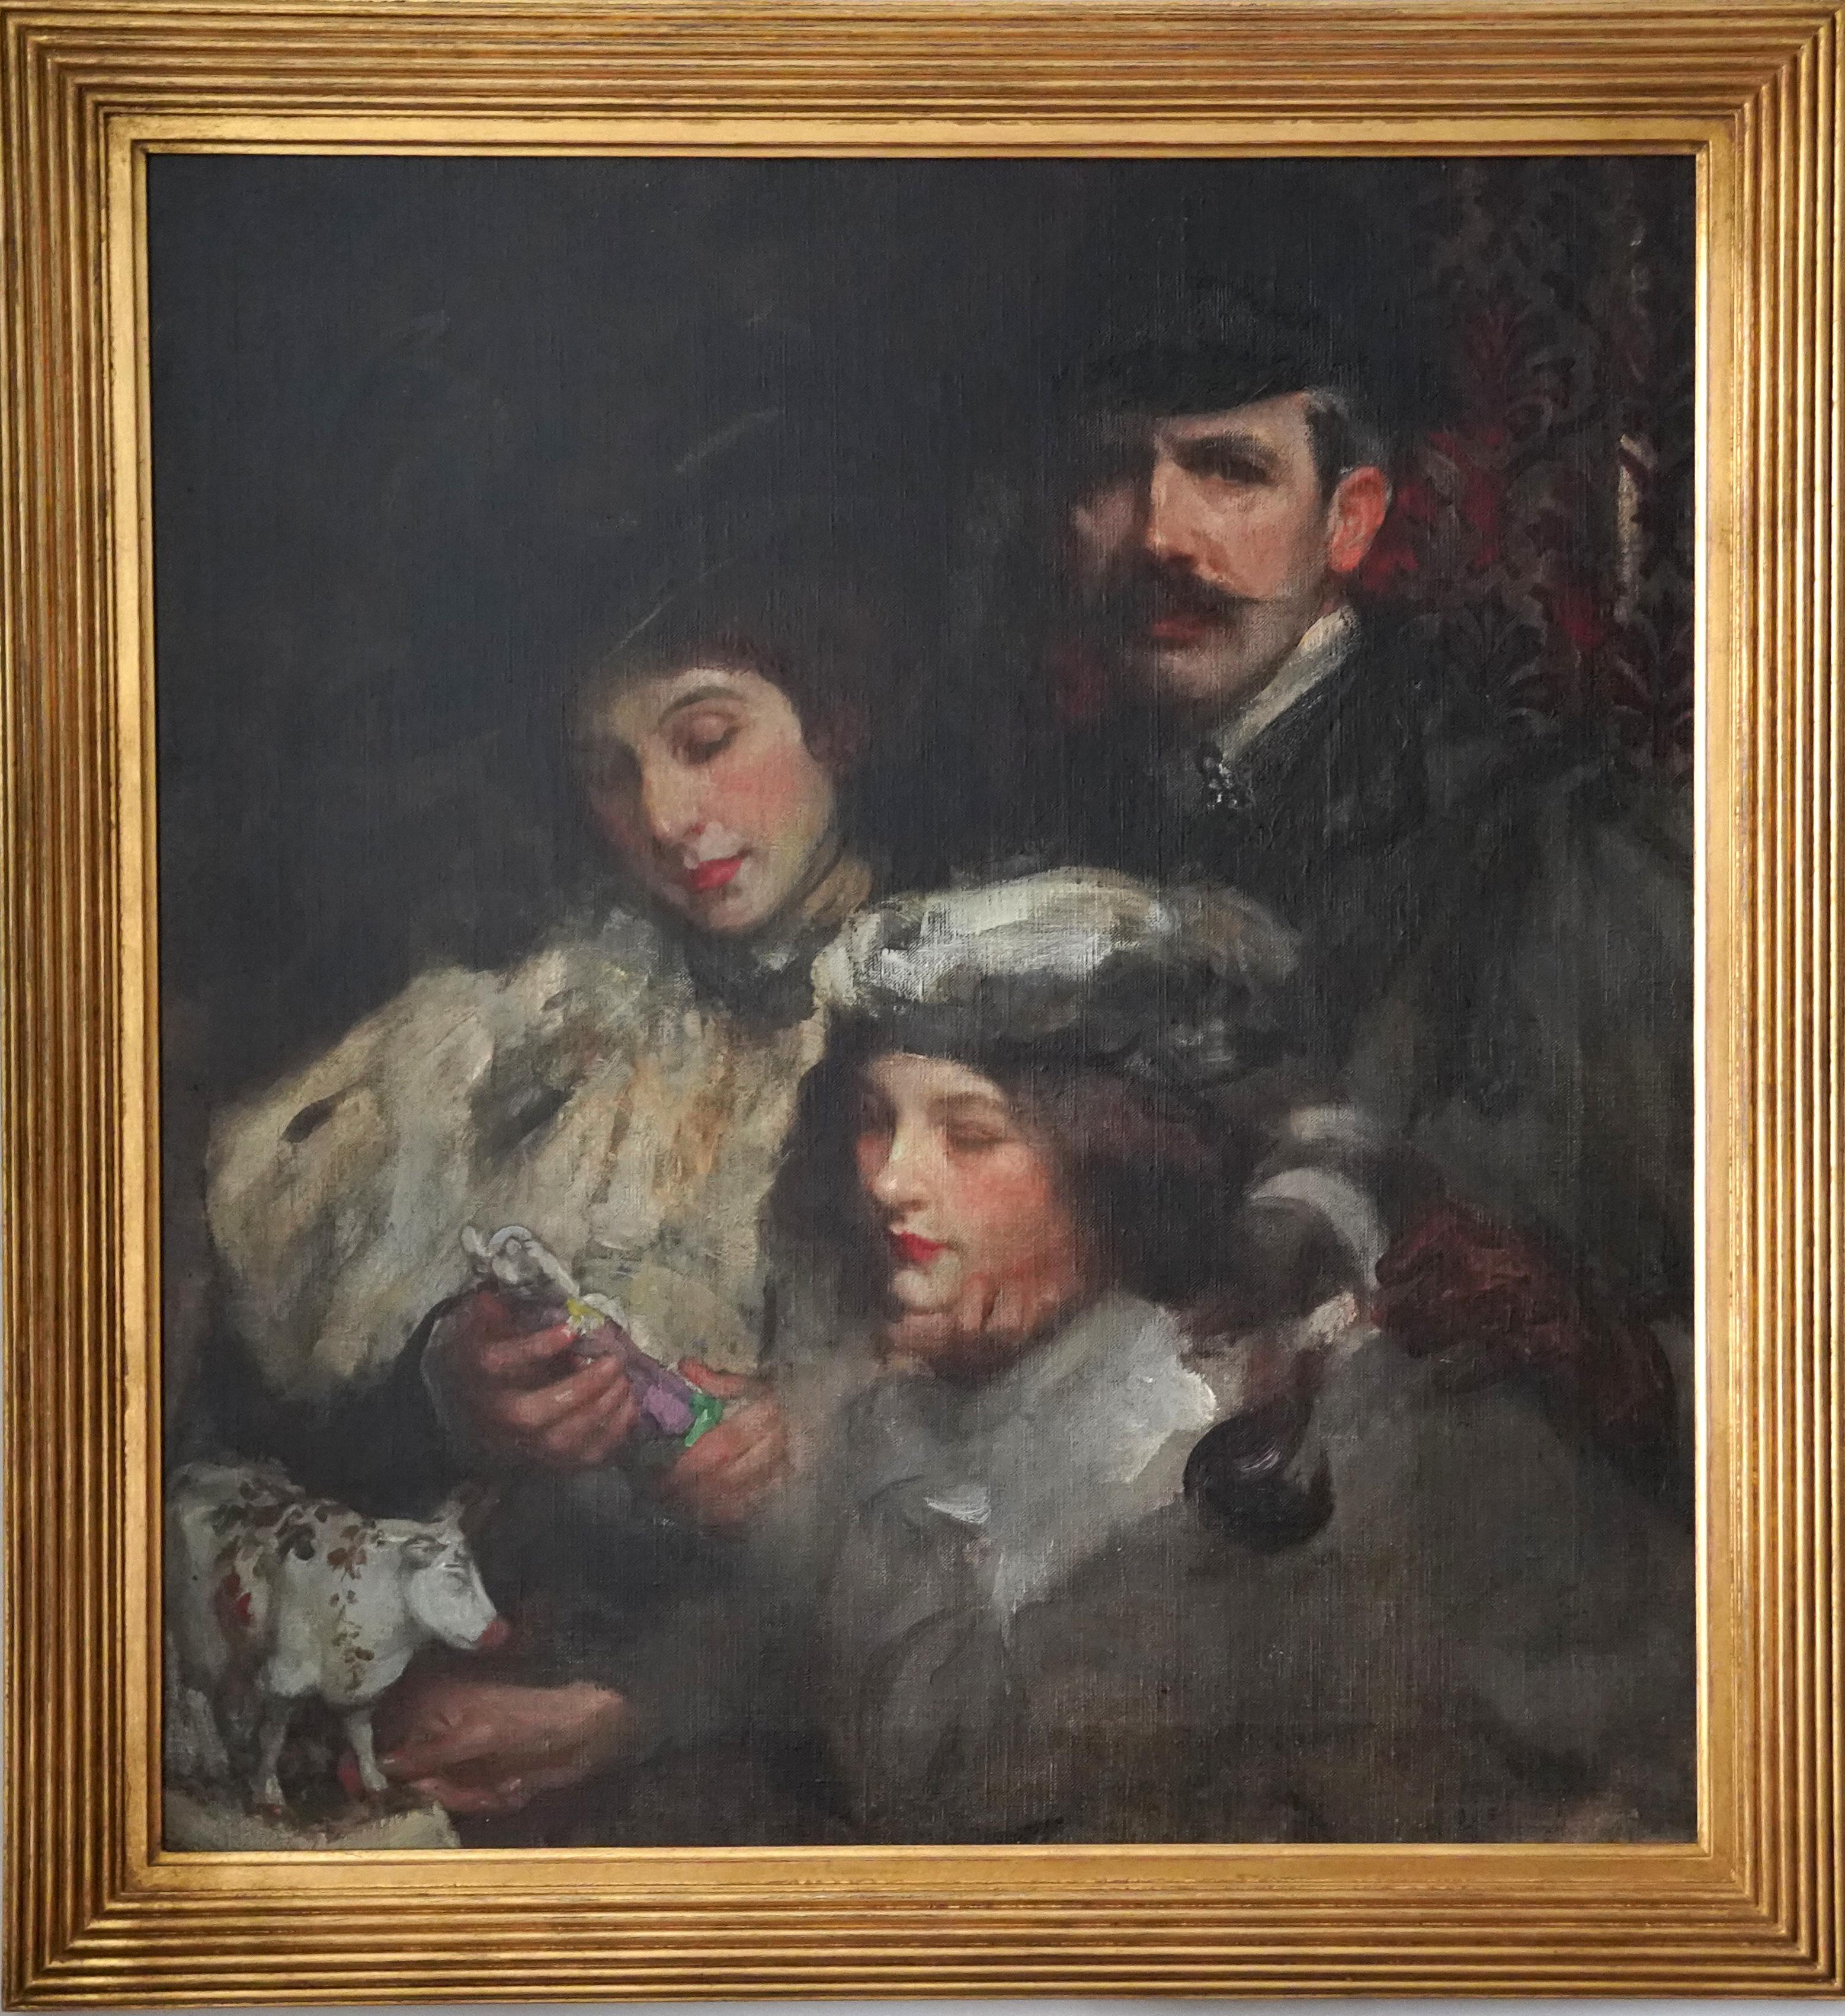 Artist's Family Portrait - British American Impressionist art oil painting